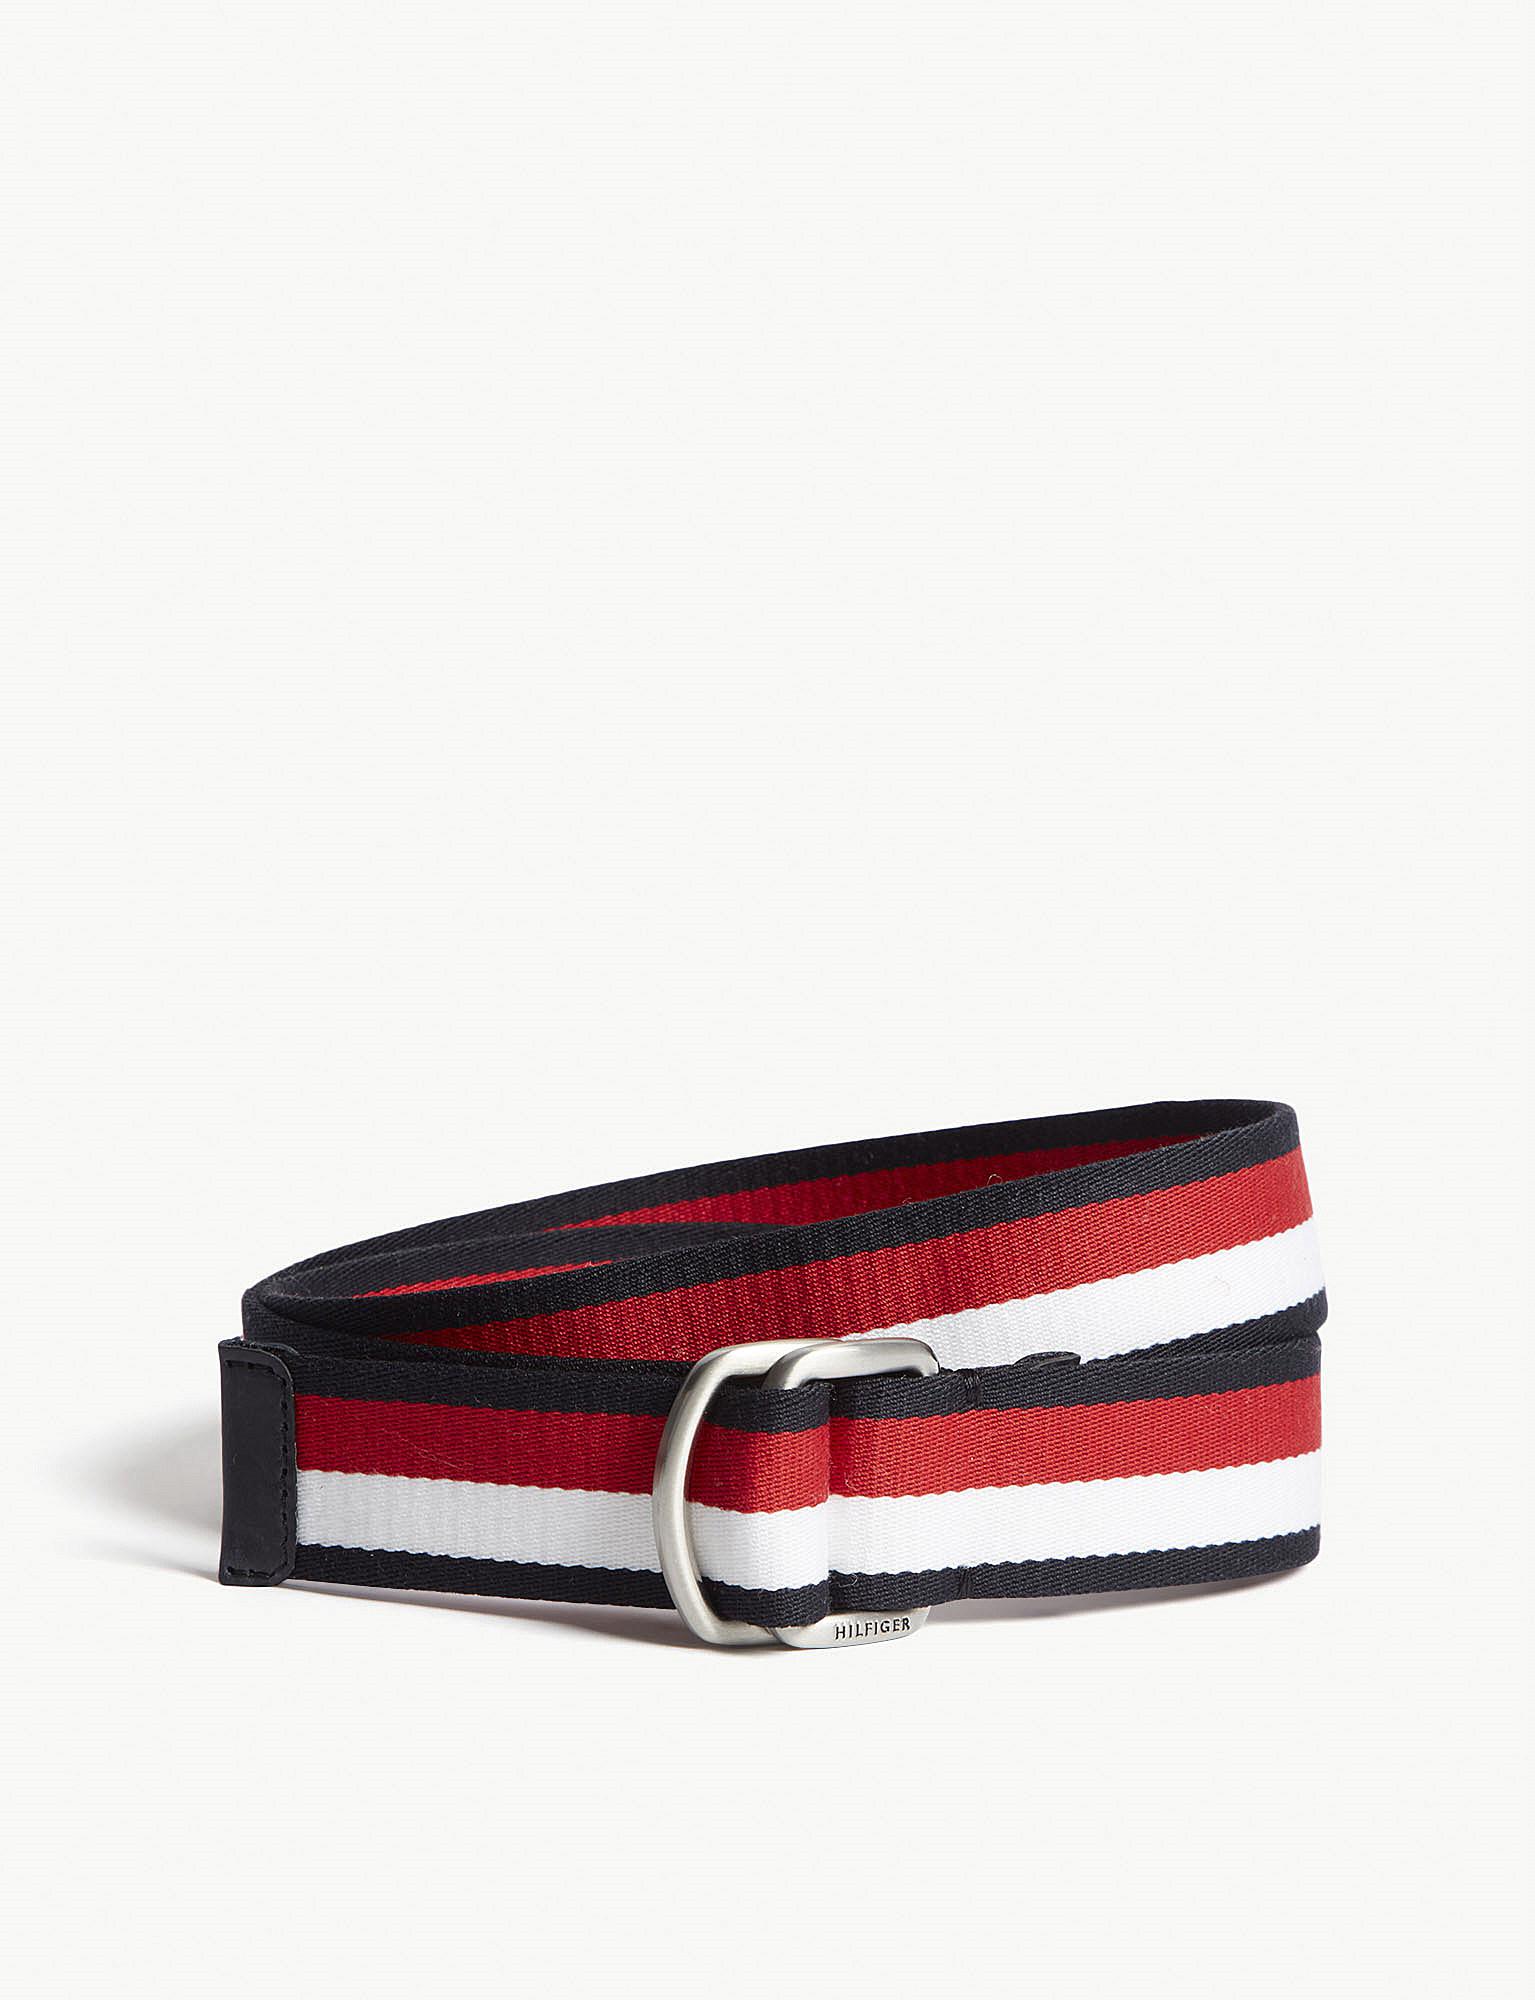 Tommy Hilfiger Stripe Webbing Belt in Red for Men - Lyst